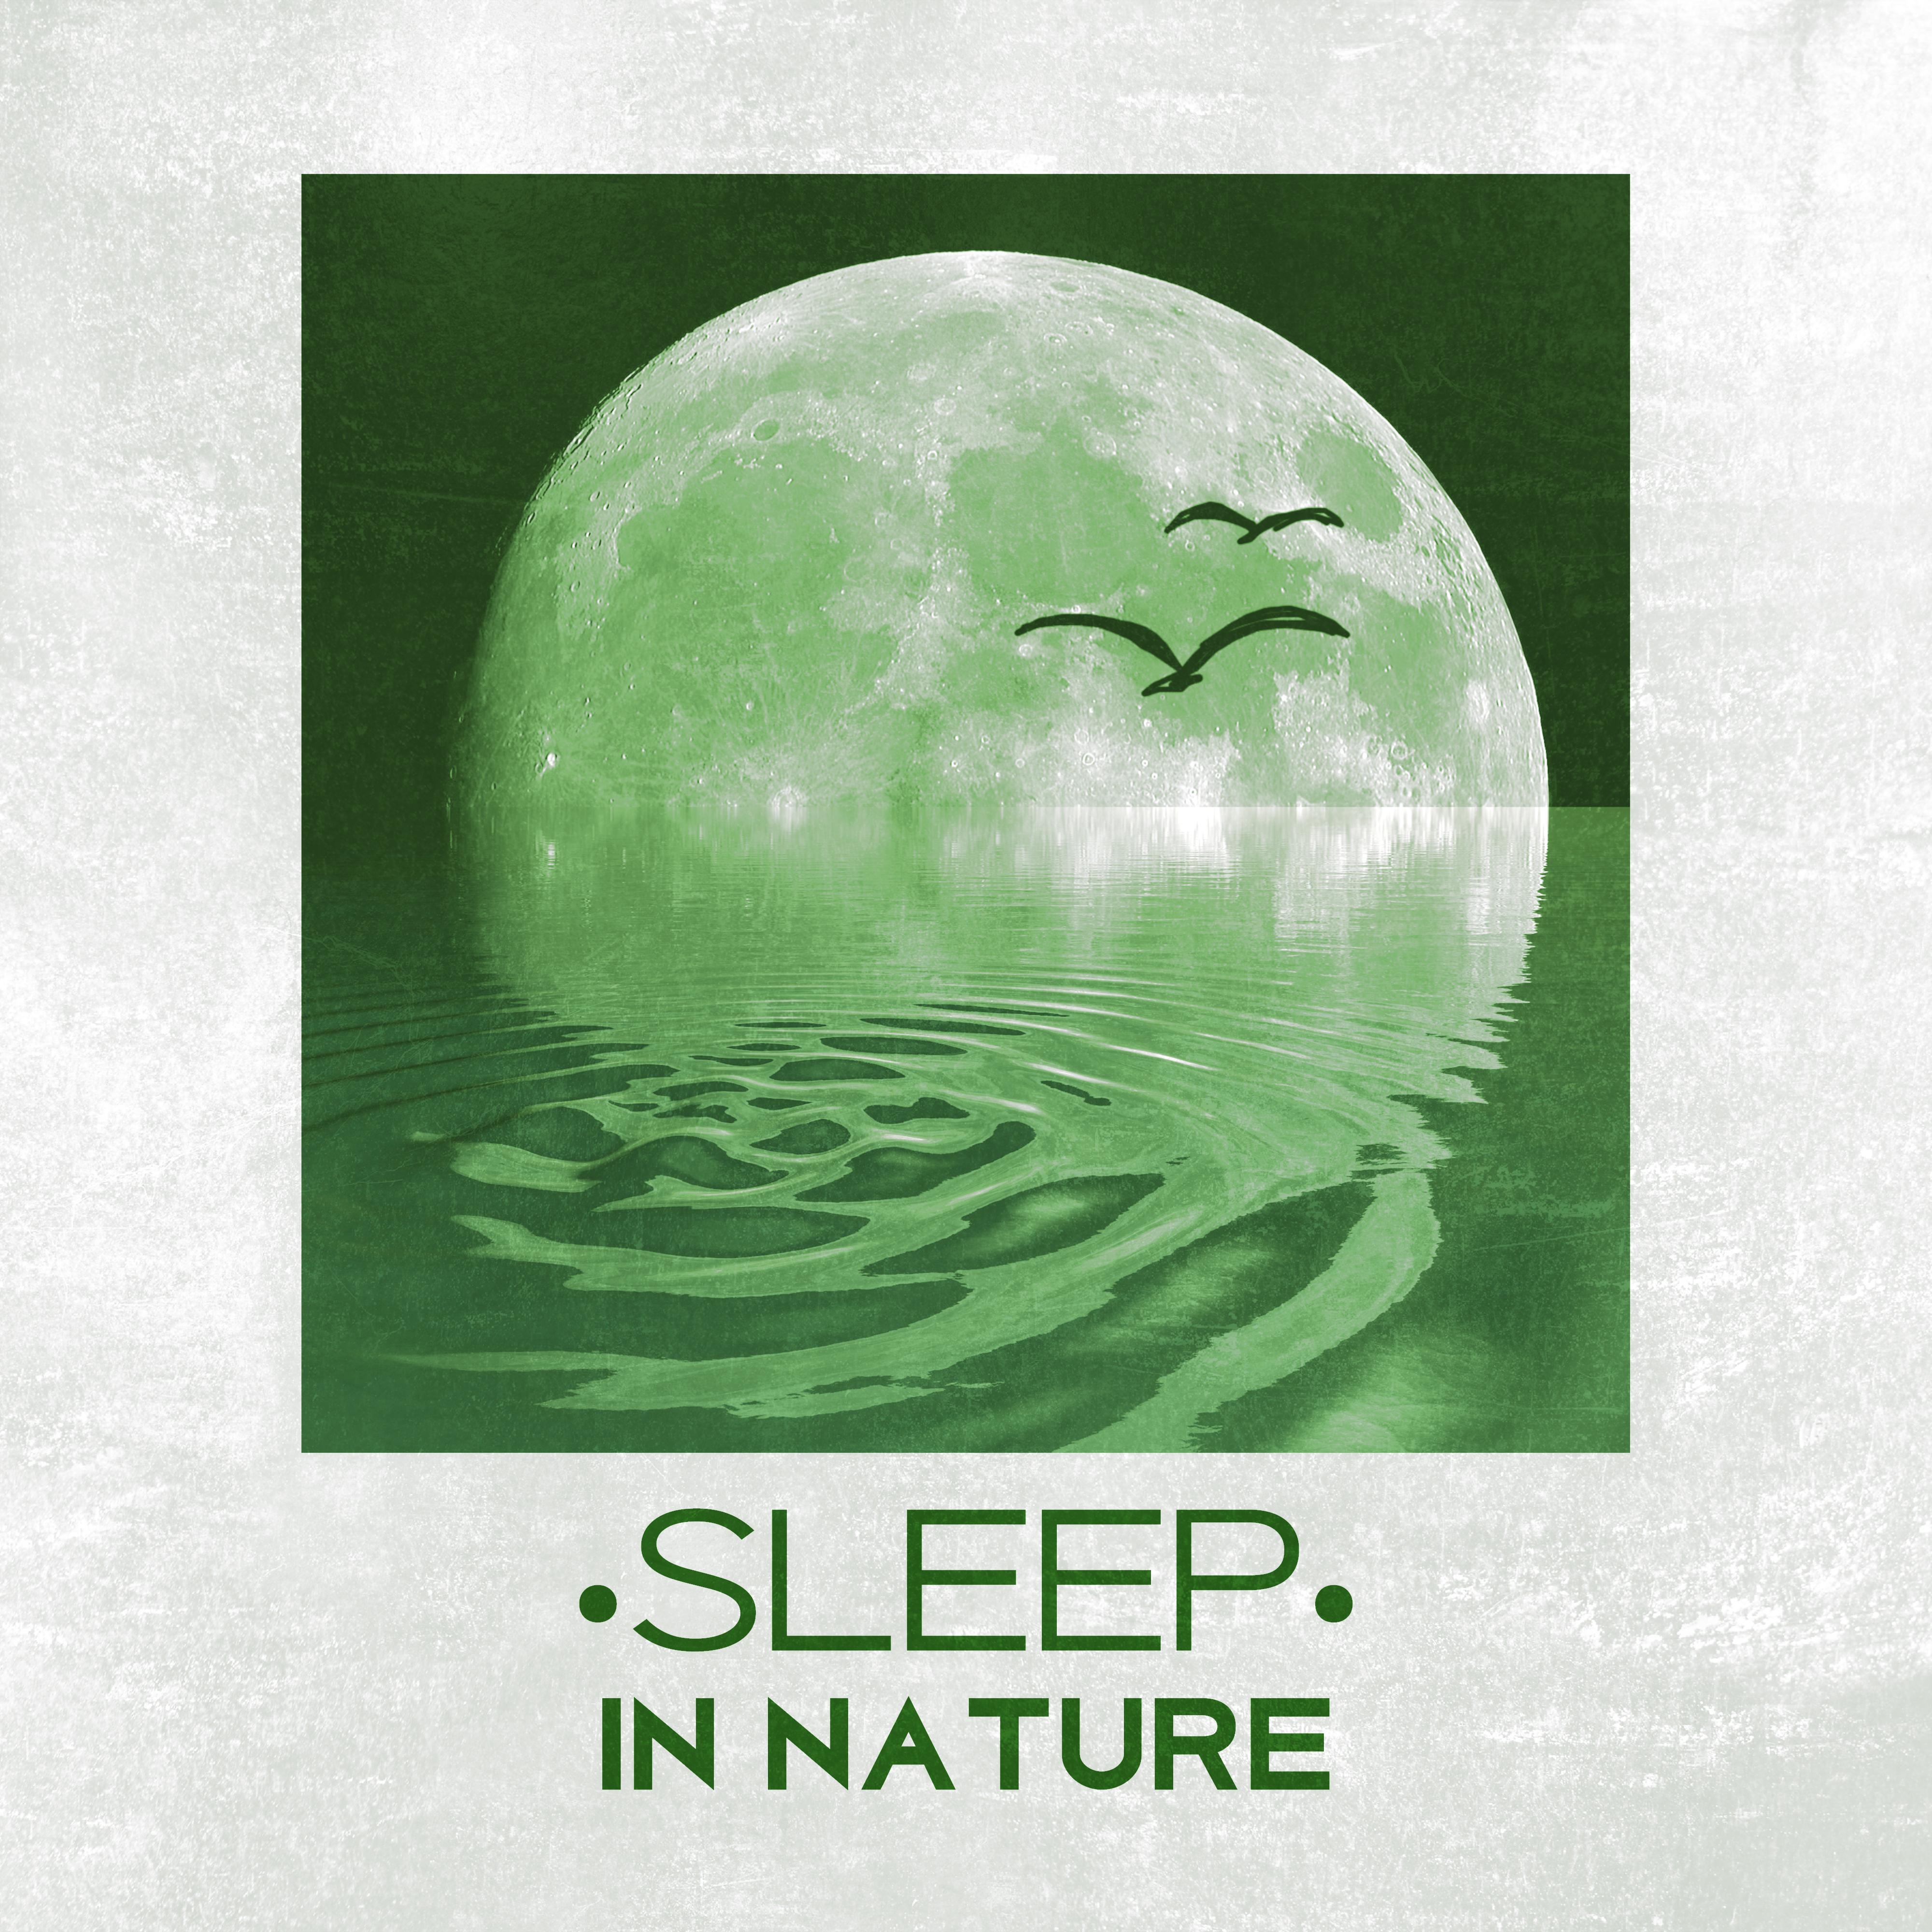 Sleep in Nature - Peaceful Sounds of Nature for Sleep, Easily Fall Asleep, Relax, Restful Sleep